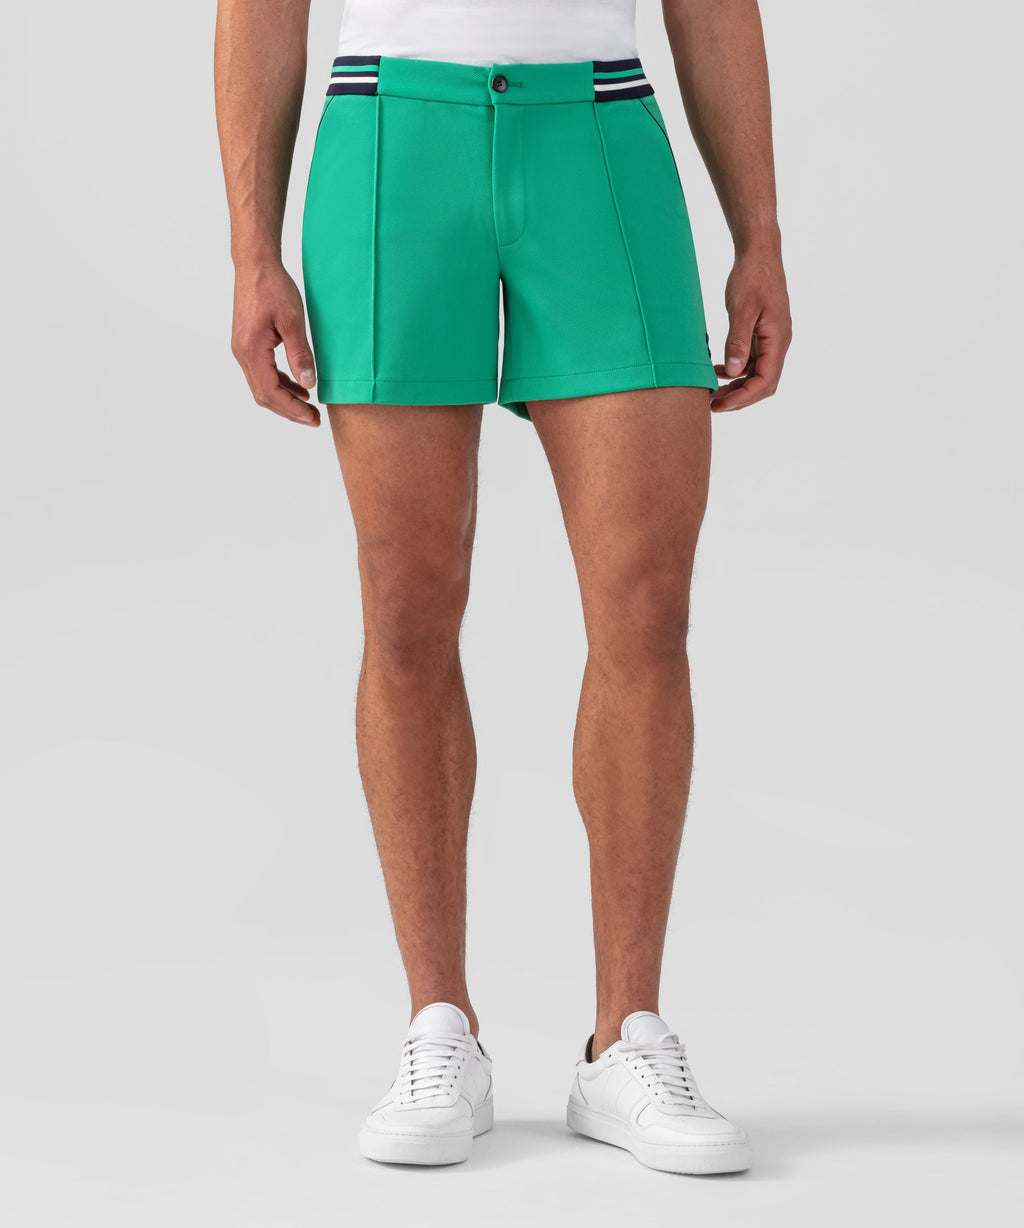 Men's Gym Shorts & Workout Shorts